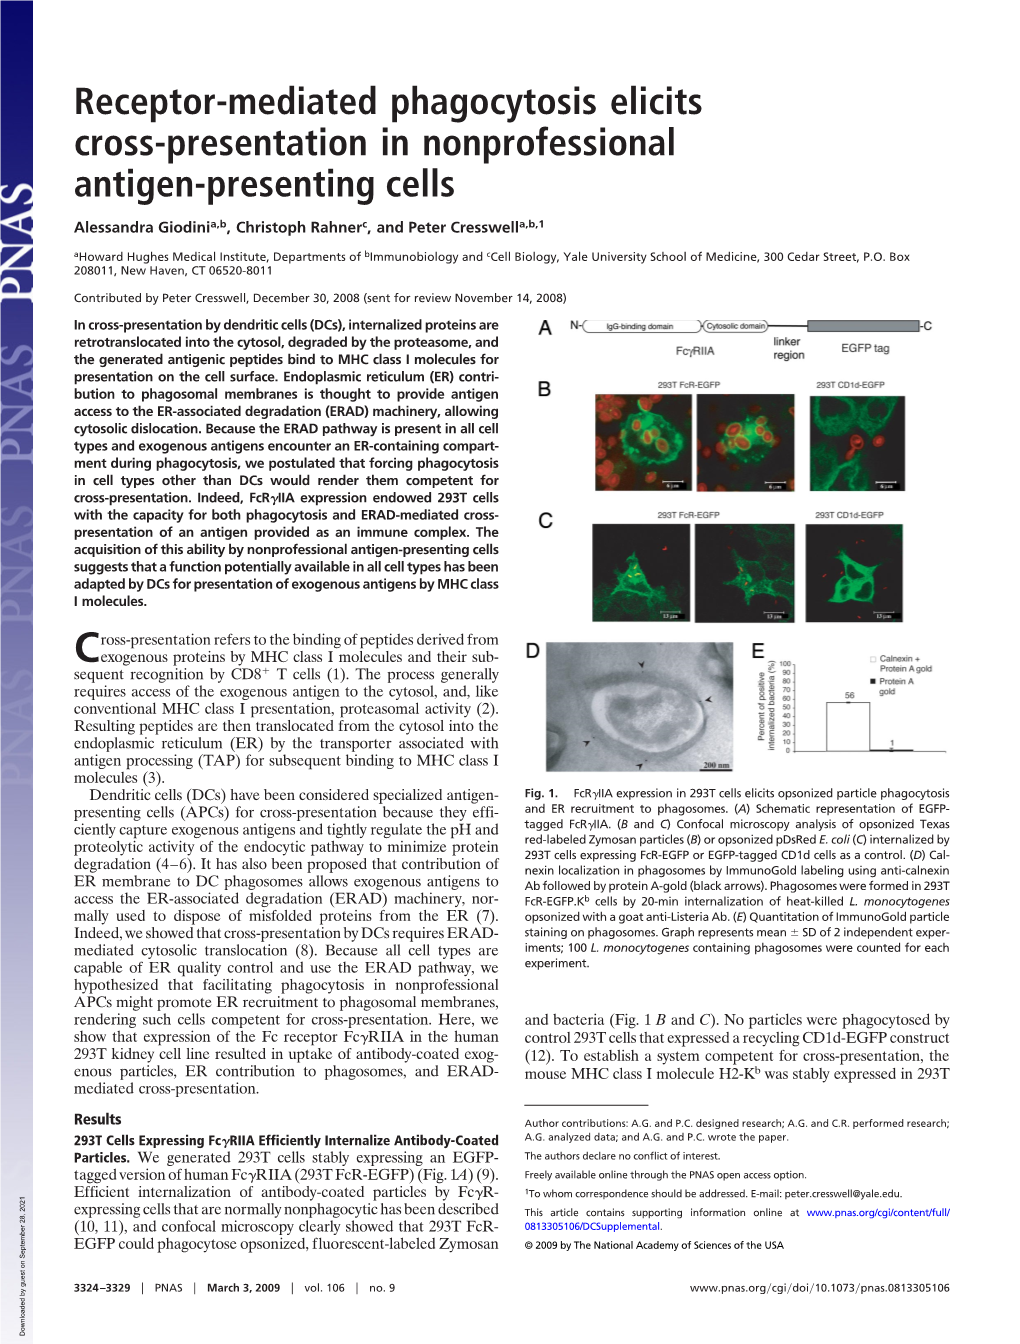 Receptor-Mediated Phagocytosis Elicits Cross-Presentation in Nonprofessional Antigen-Presenting Cells